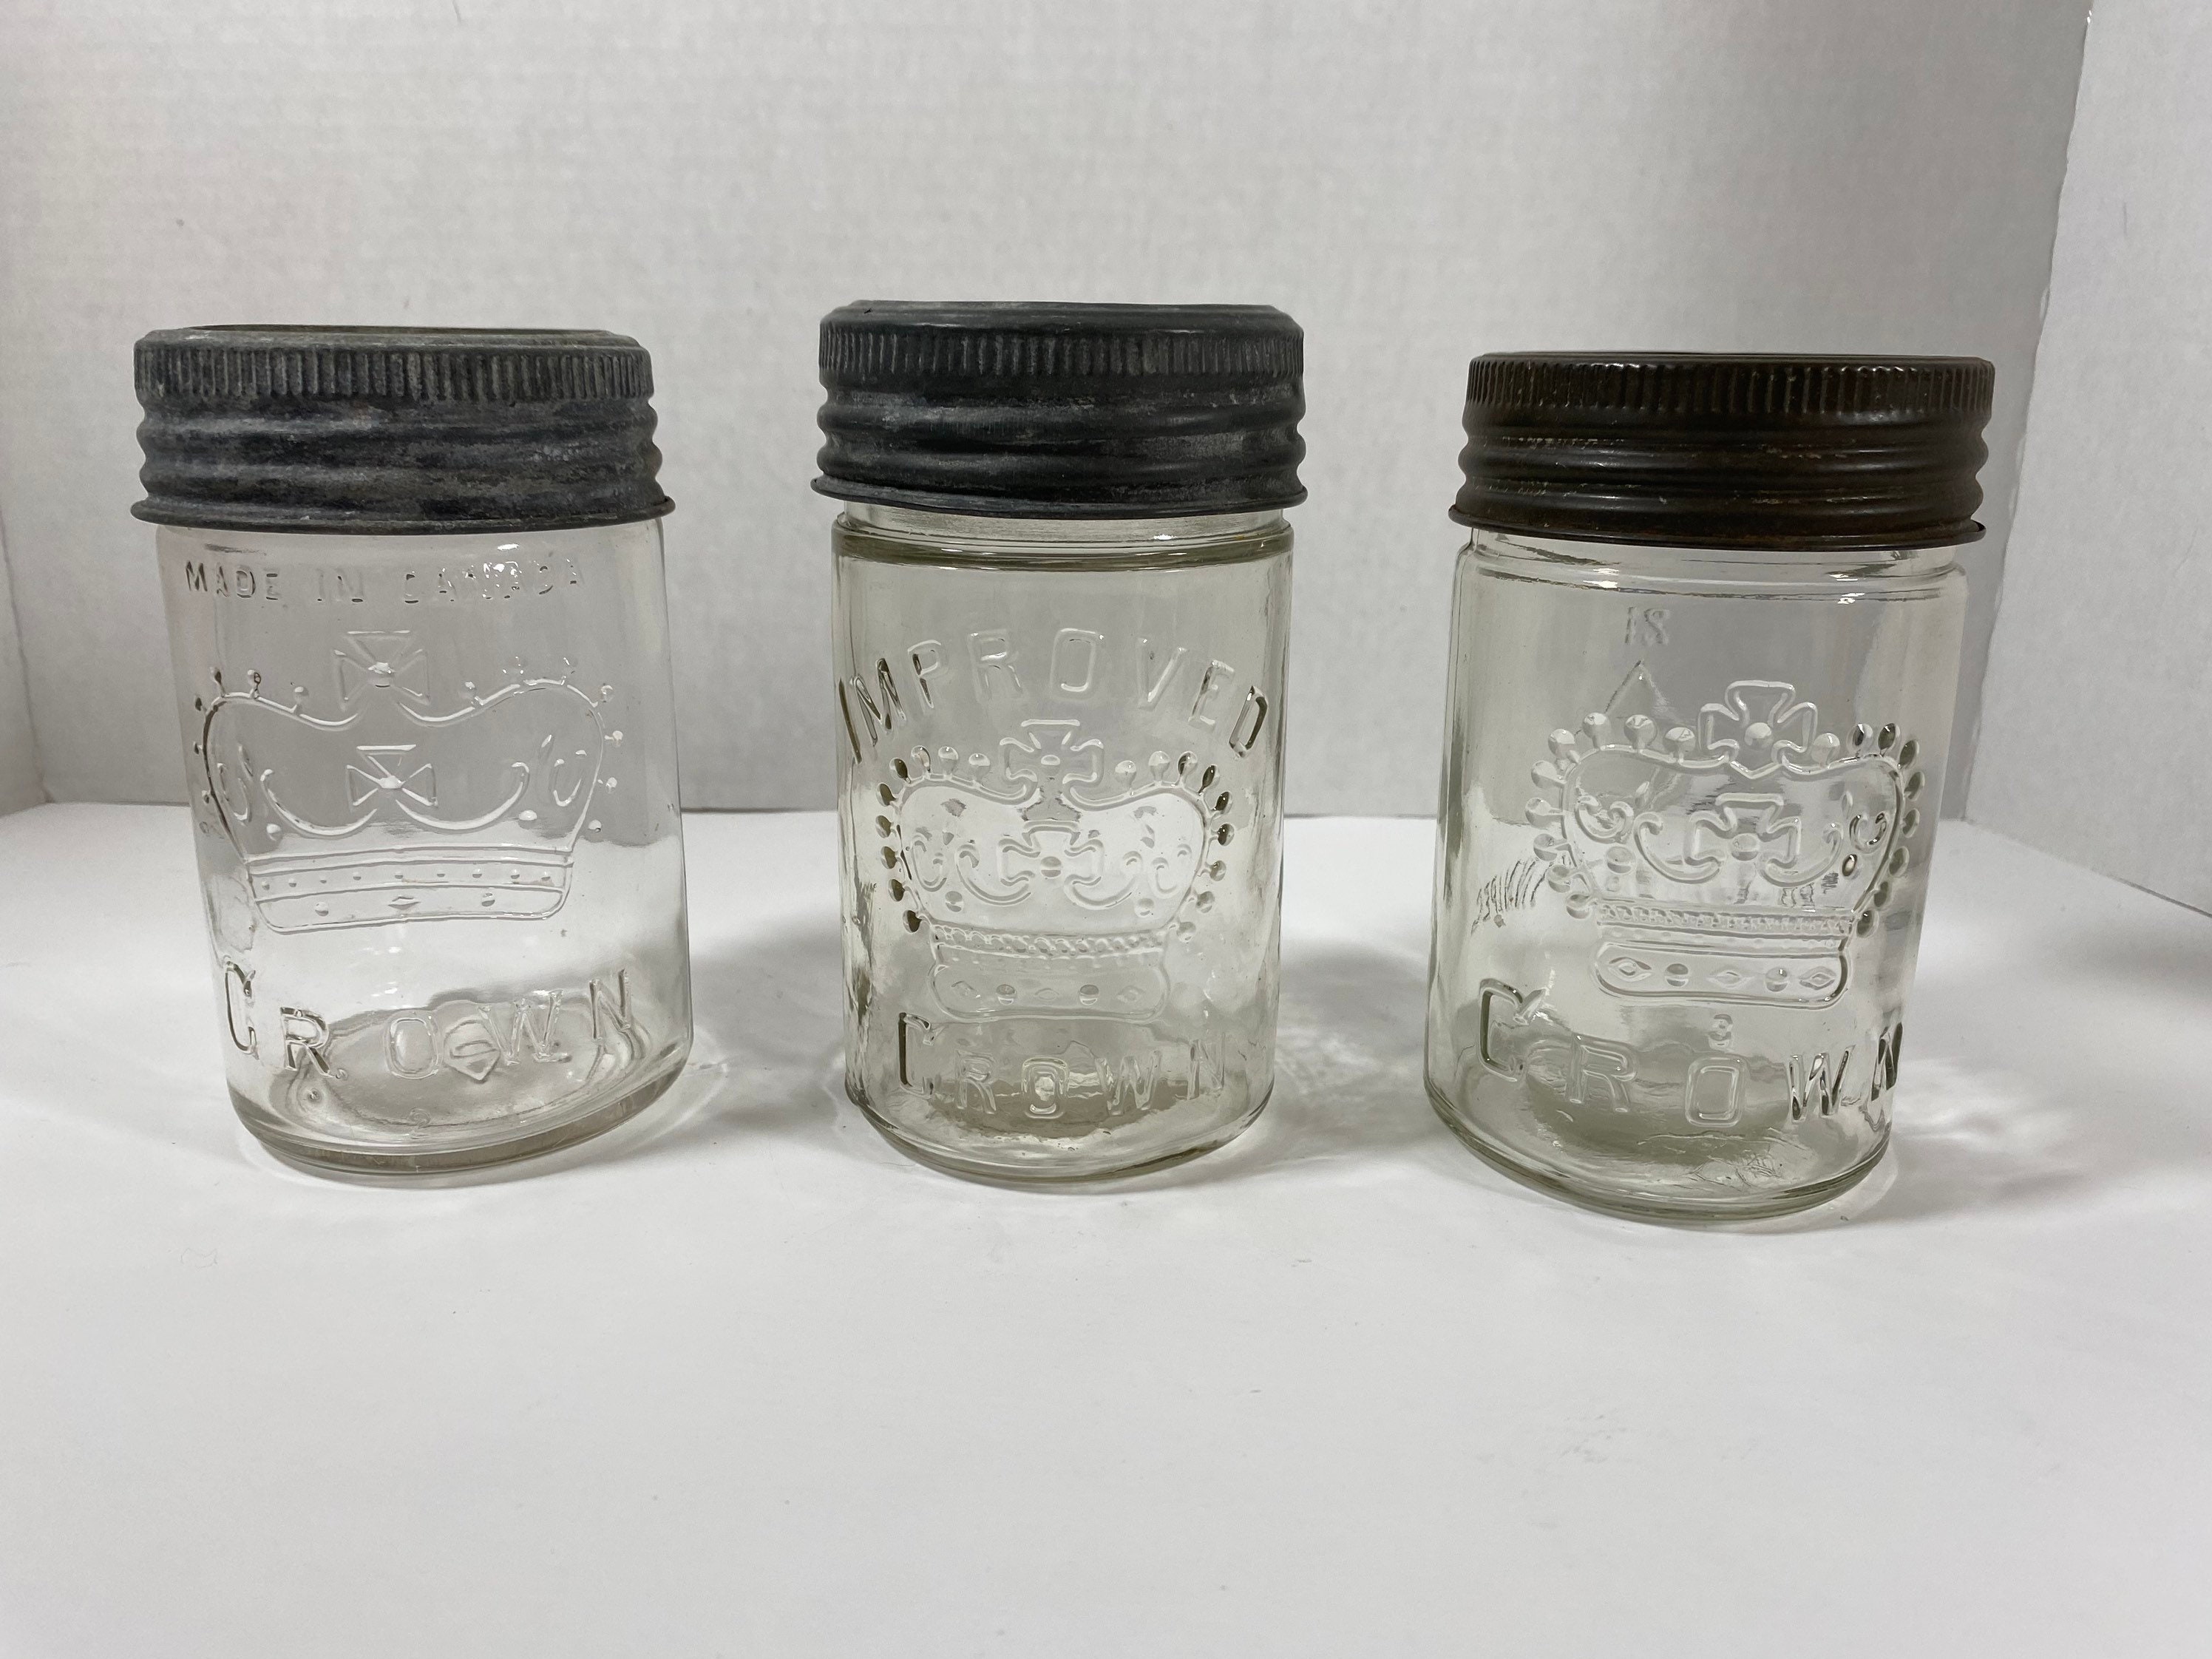 Alice in Wonderland Makeup Brush Holders, Set of 3 Glass Jars. Jar